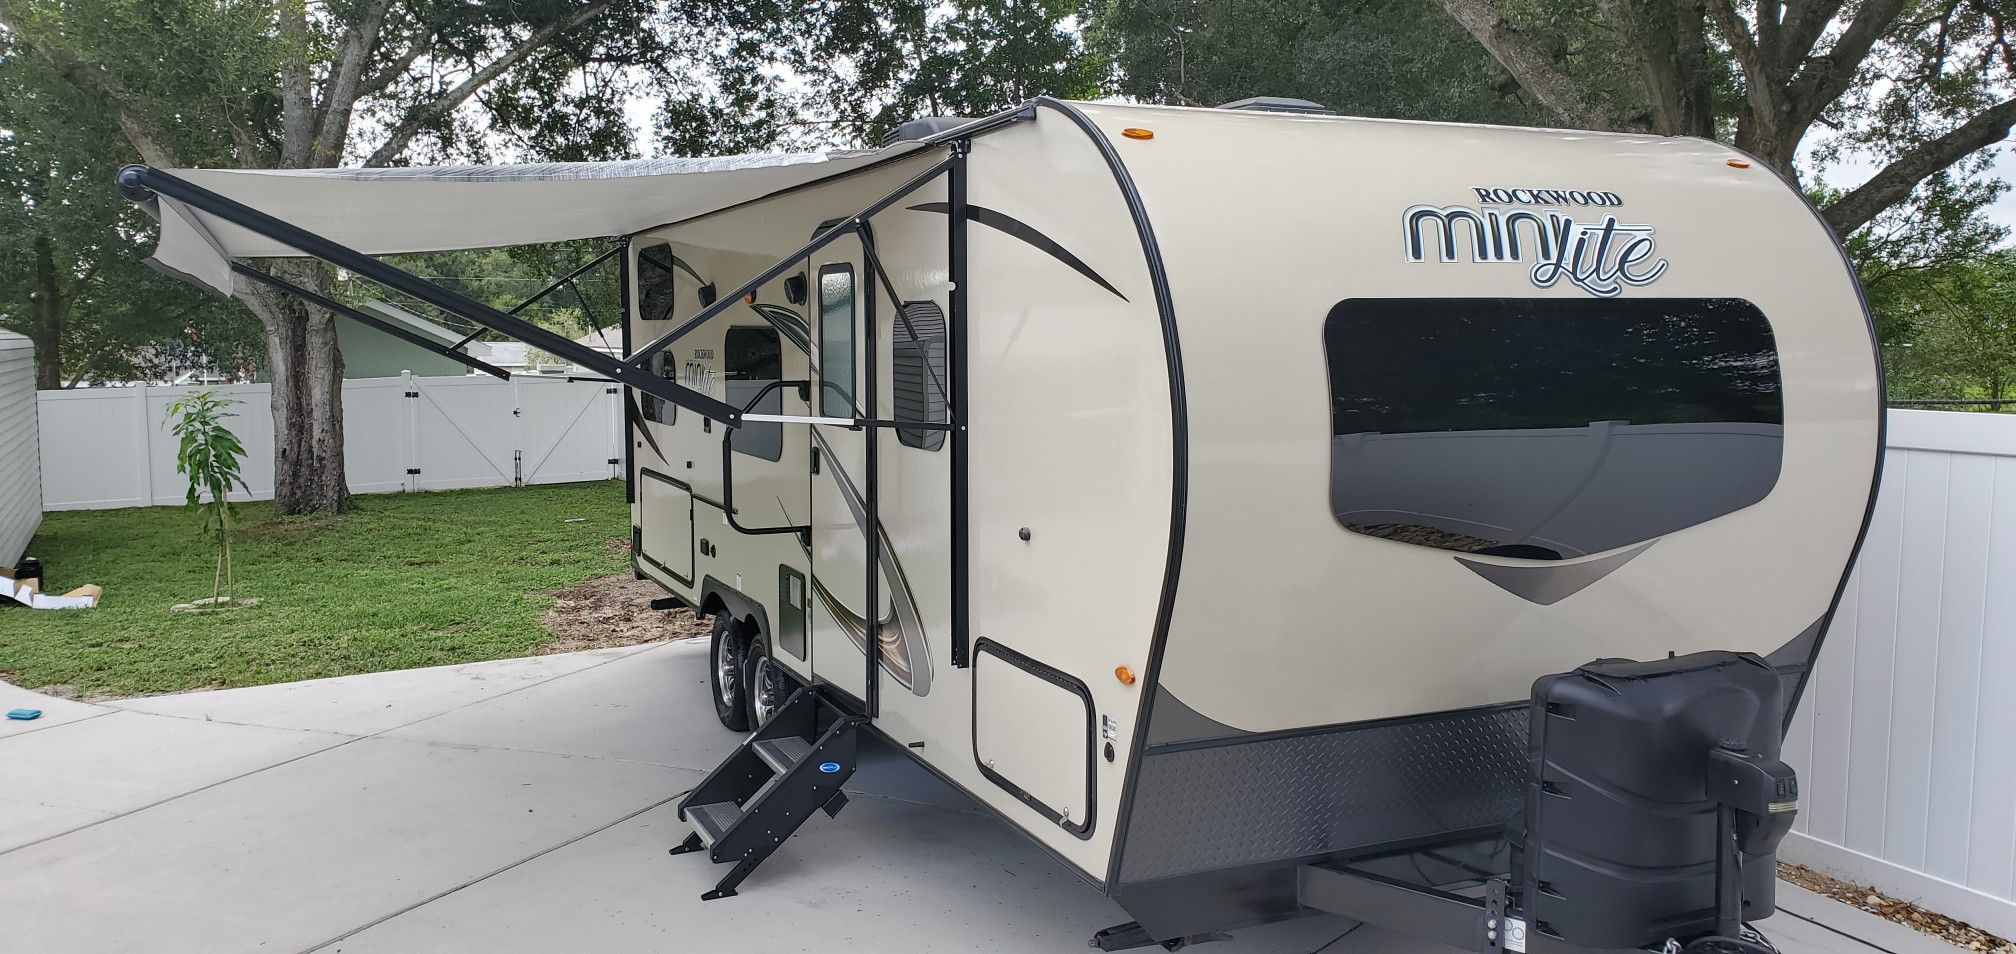 2019 Rockwood Minilite 2508 like new travel trailer, camper, rv